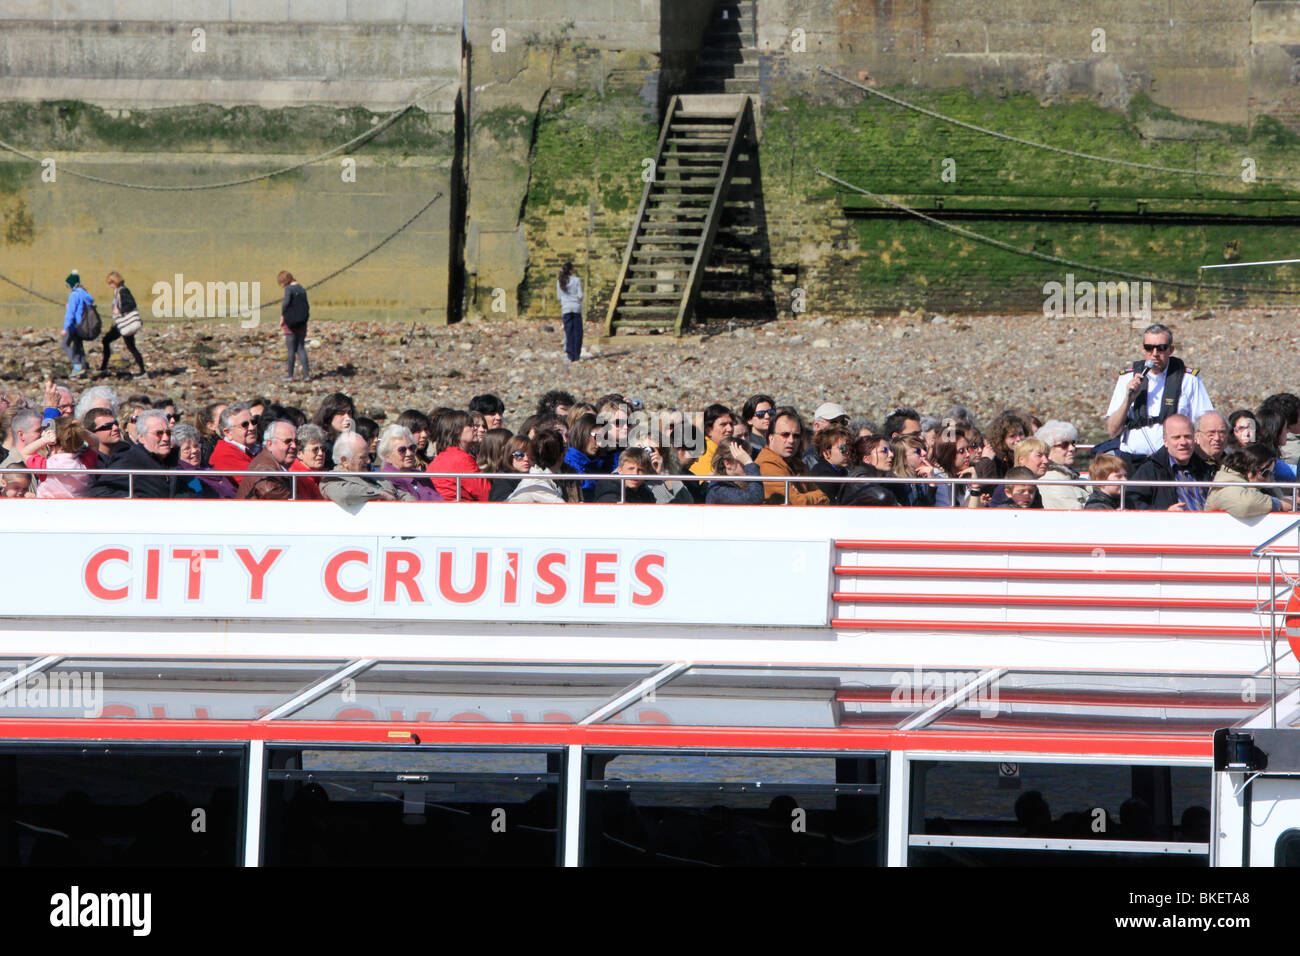 river thames cruises city breaks people london england uk gb Stock Photo